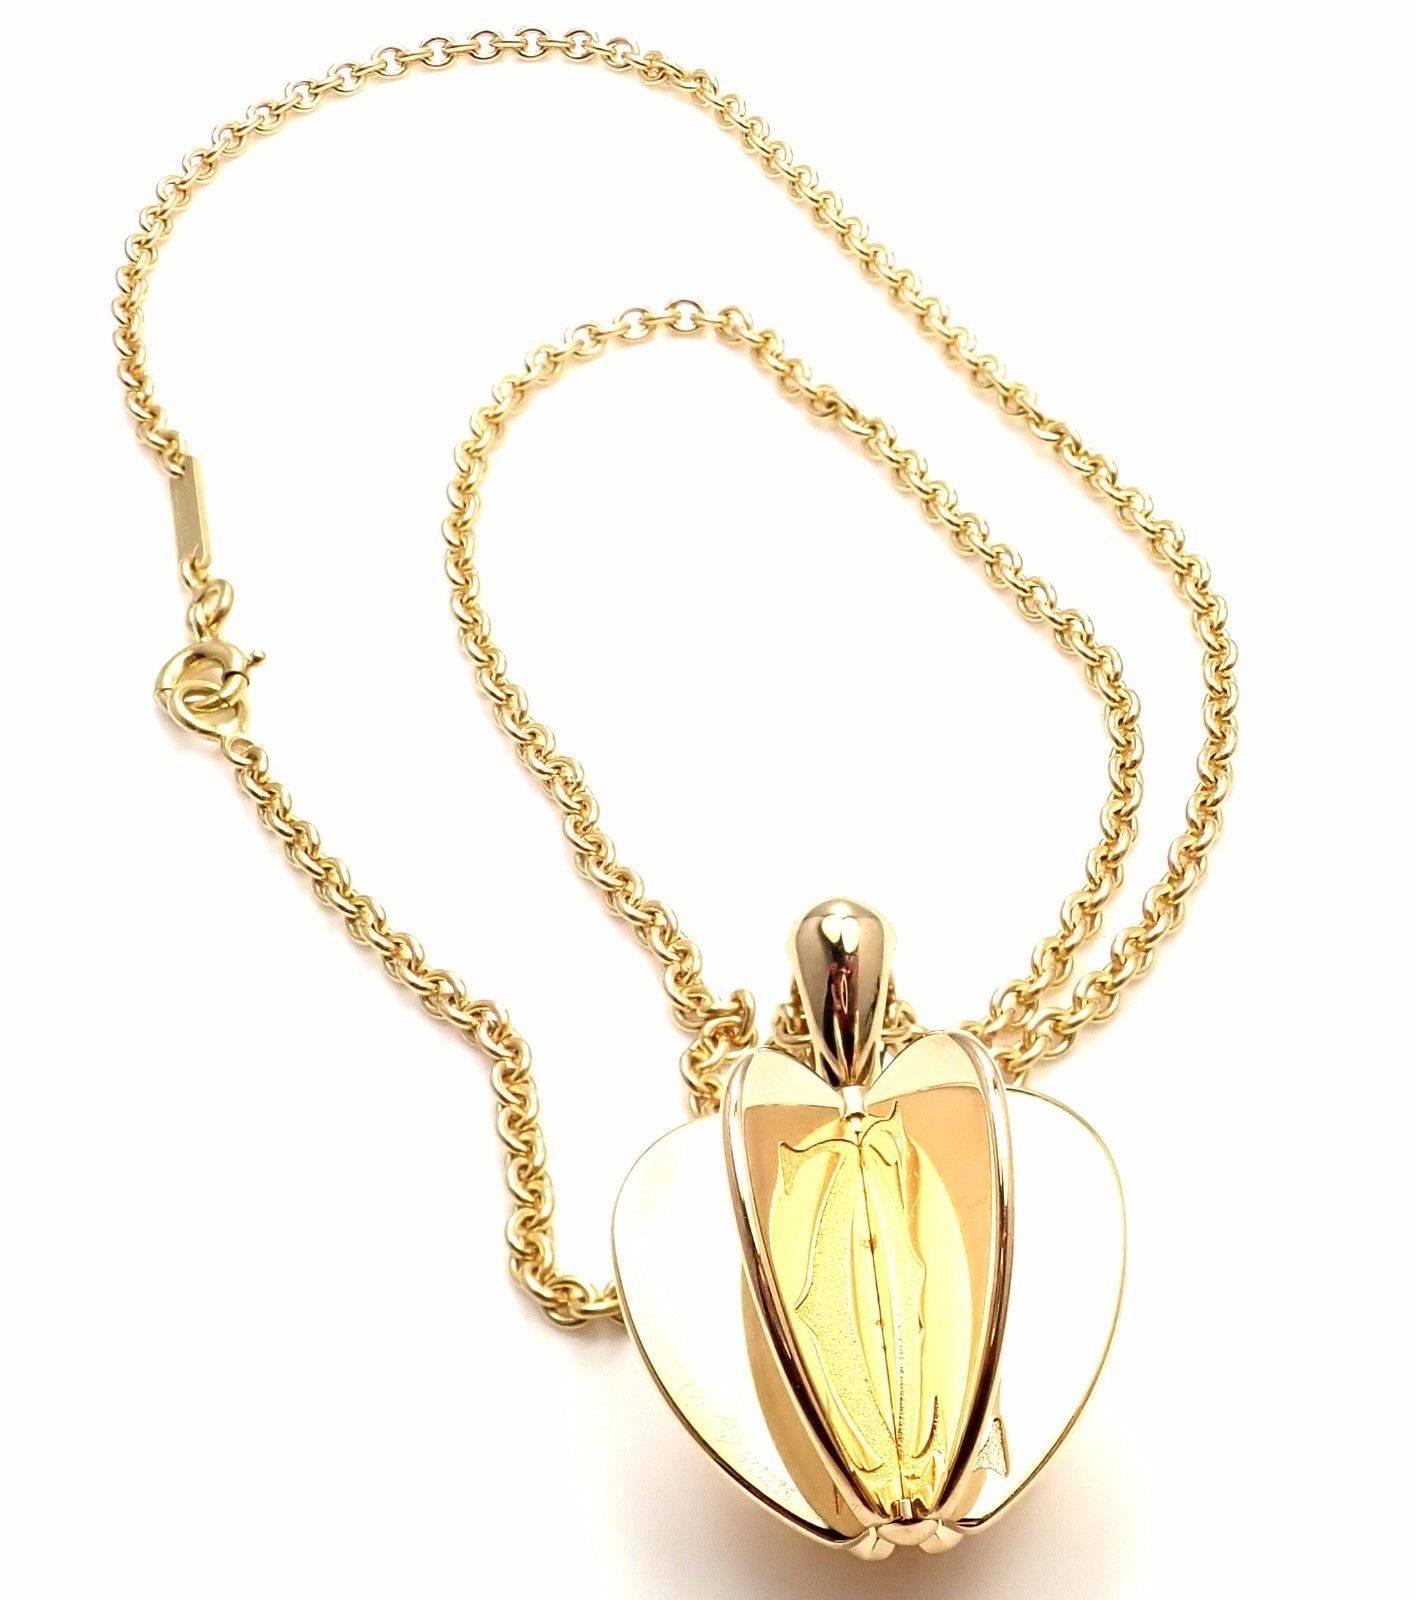 18k Yellow Gold Double C Apple Heart Pendant Necklace by Cartier. 
Details: 
Pendant: 27mm x 20mm
Chain: Length 16.5